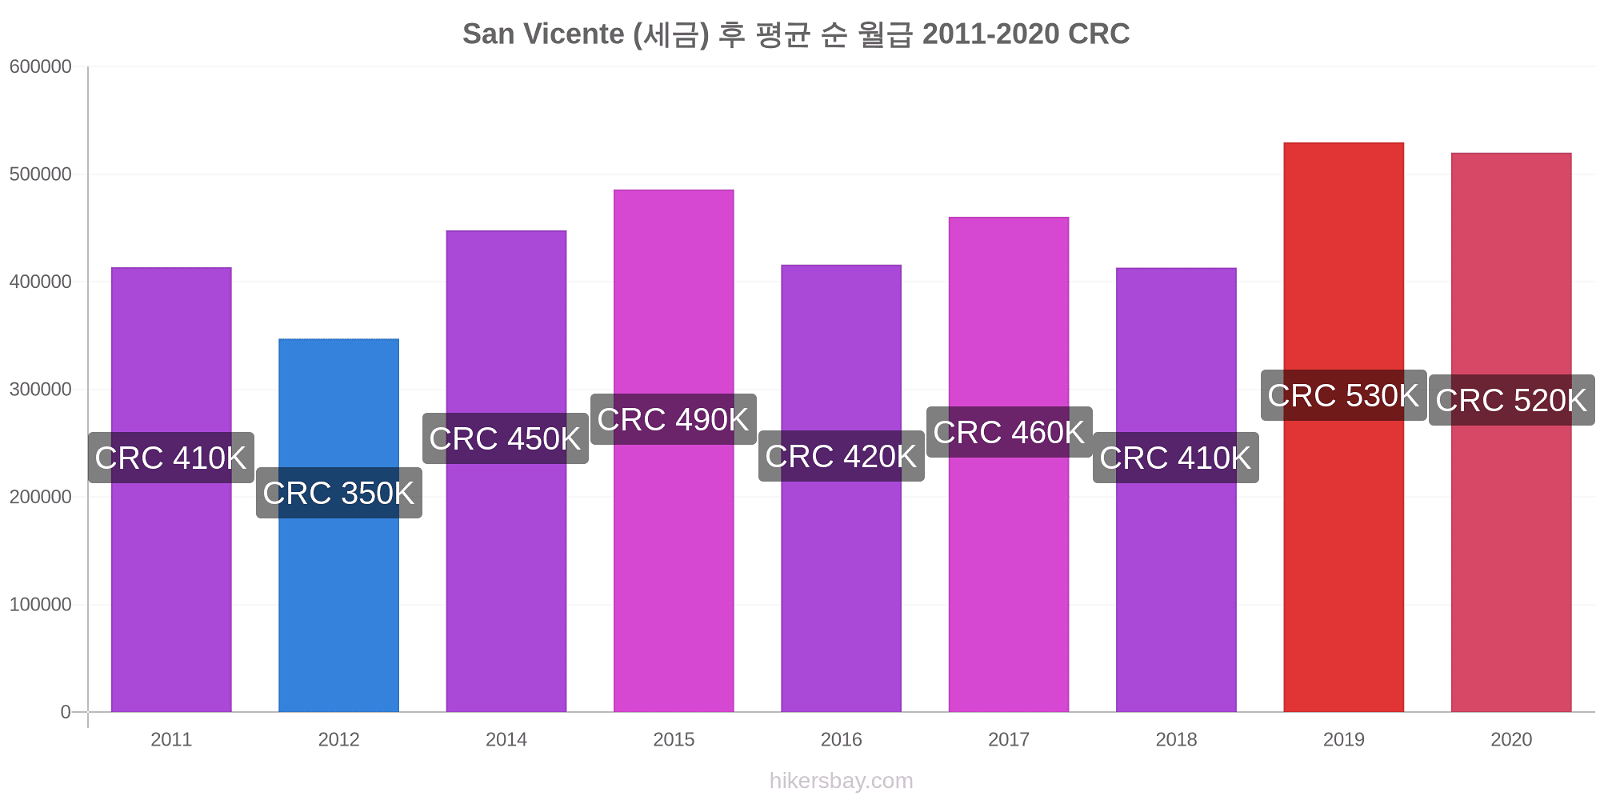 San Vicente 가격 변경 (세금) 후 평균 순 월급 hikersbay.com